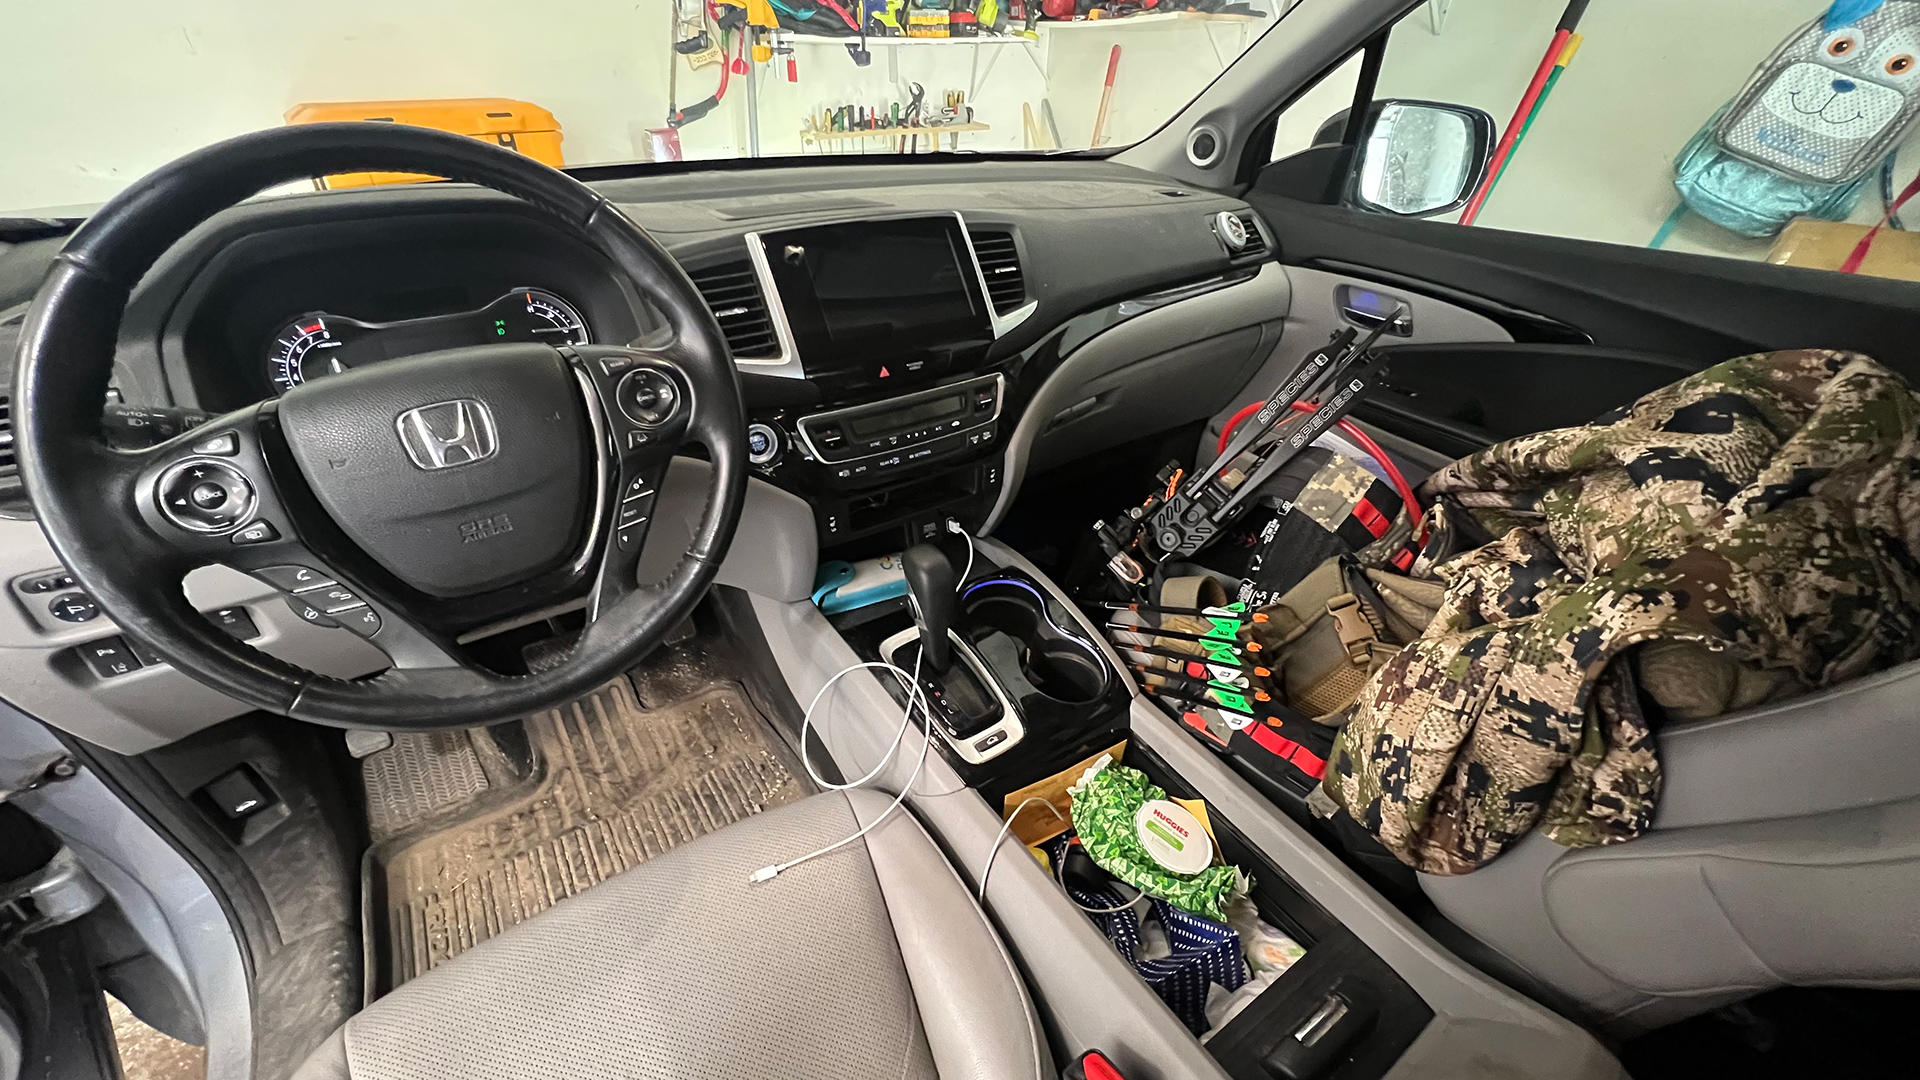 https://www.thedrive.com/uploads/2021/04/31/Clean-Car-Interior-Hero.jpg?auto=webp